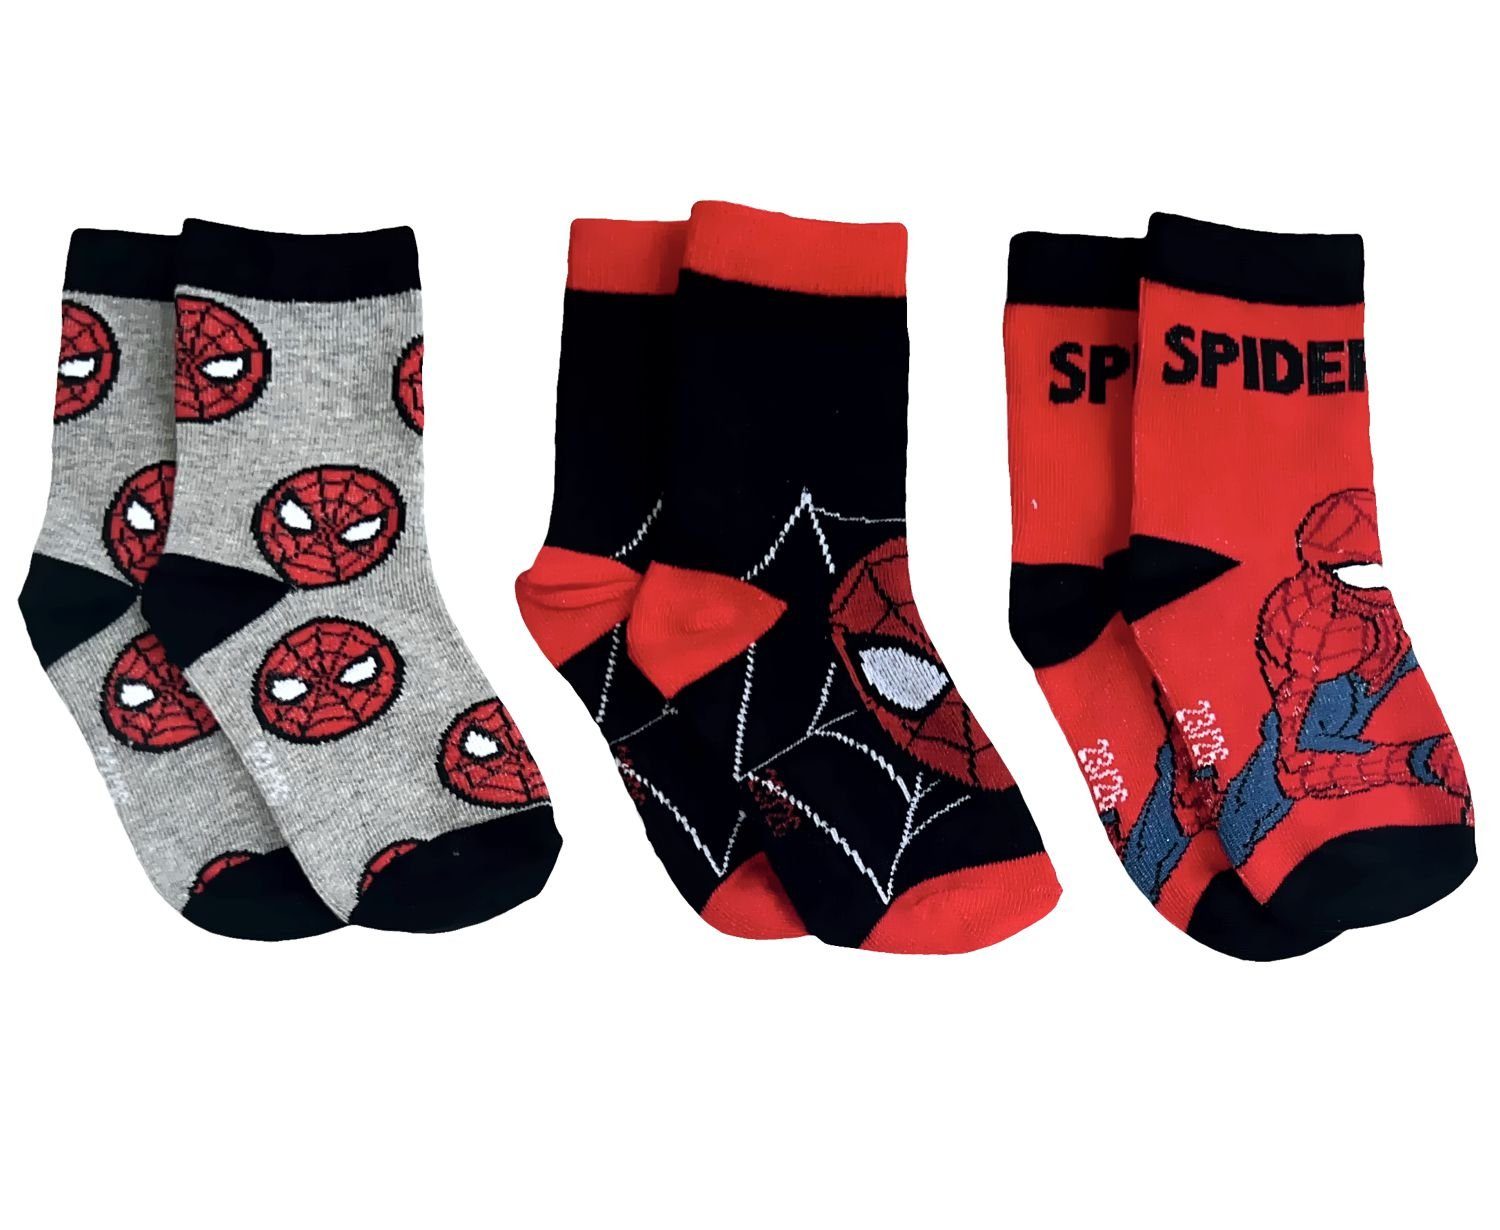 Spiderman Feinsocken SPIDERMAN Kindersocken Jungen + Mädchen Strümpfe 3 Paar im Set Kniestrümpfe Socken Gr. 23 24 25 26 27 28 29 30 31 32 33 34 Grau